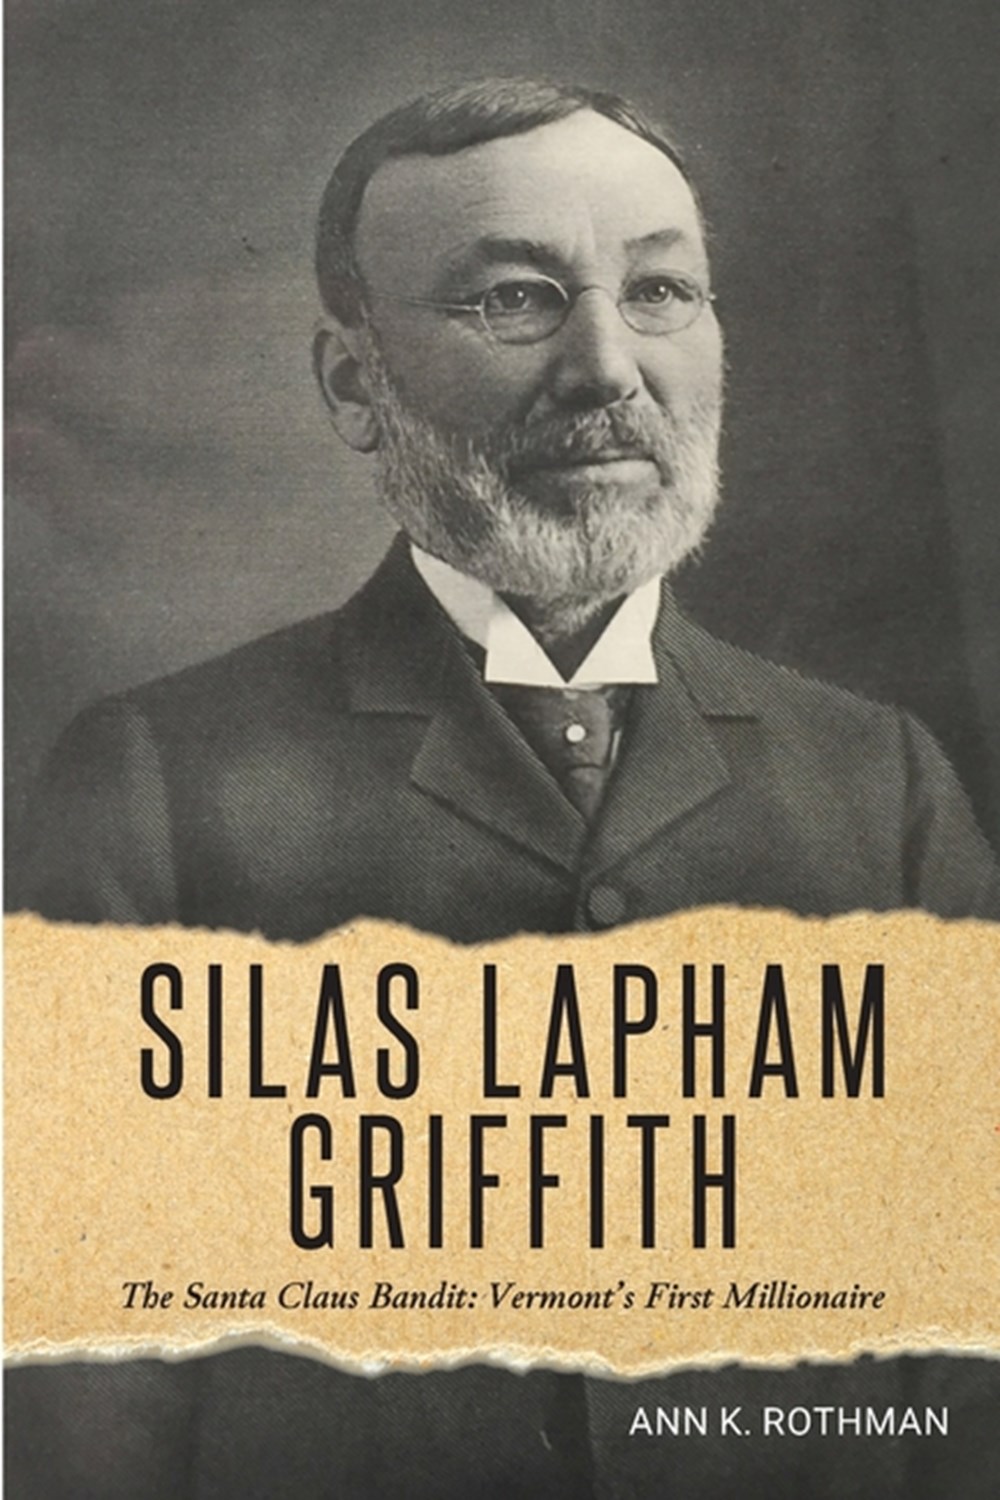 Silas Lapham Griffith The Santa Claus Bandit: Vermont's First Millionaire